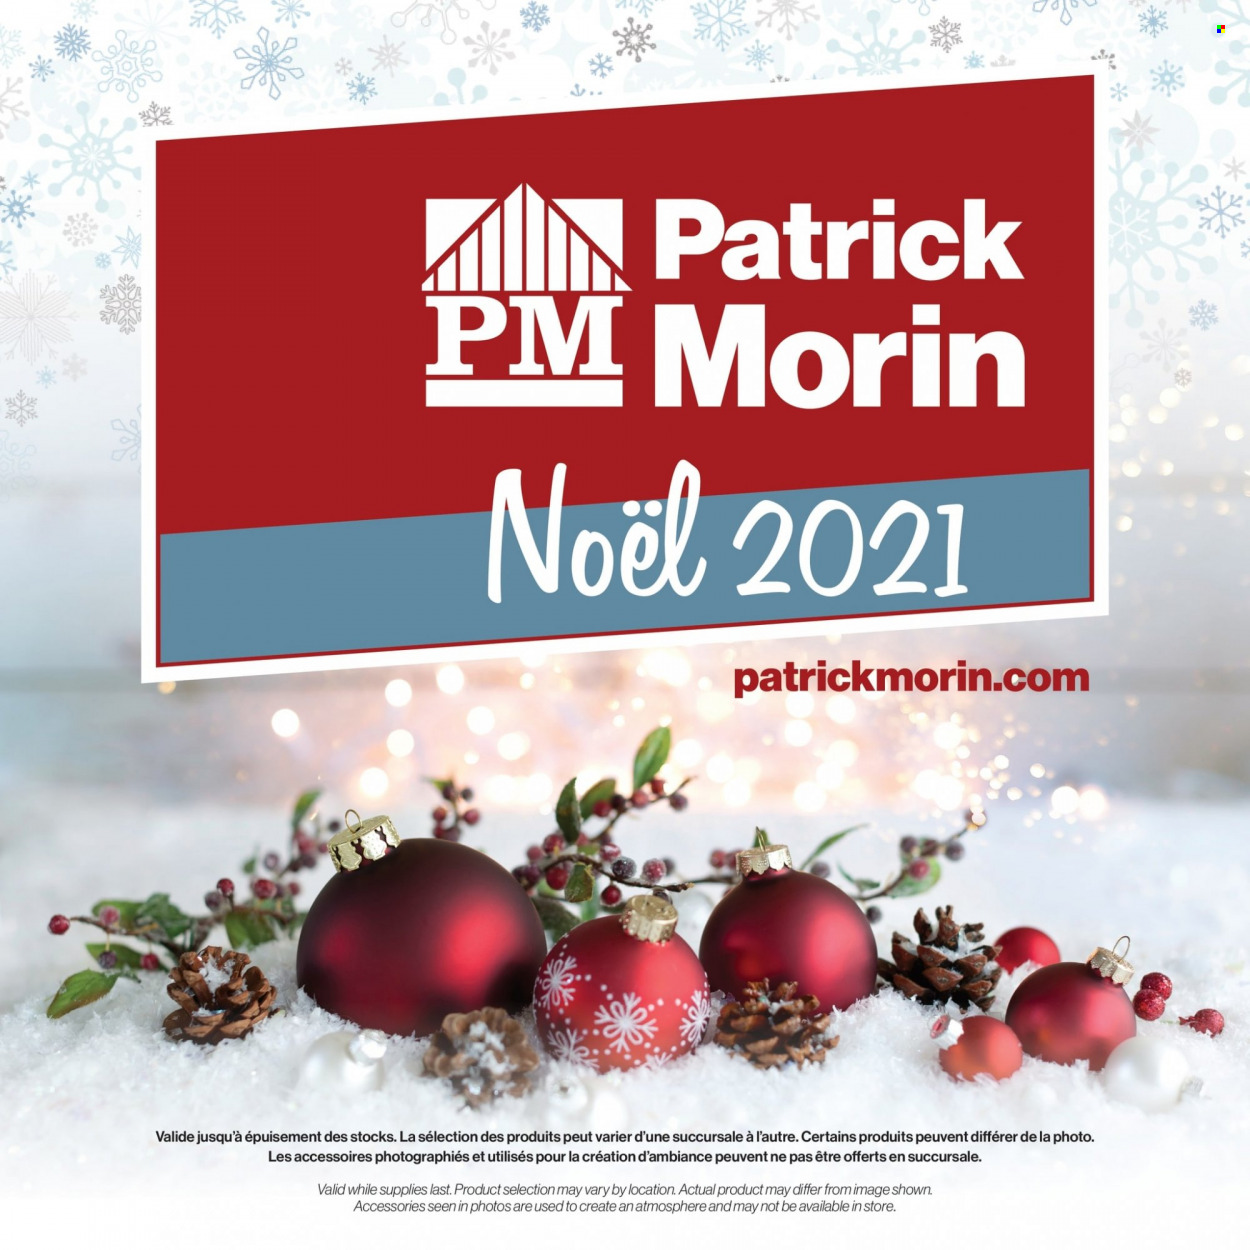 Patrick Morin flyer  - November 18, 2021 - December 31, 2021.